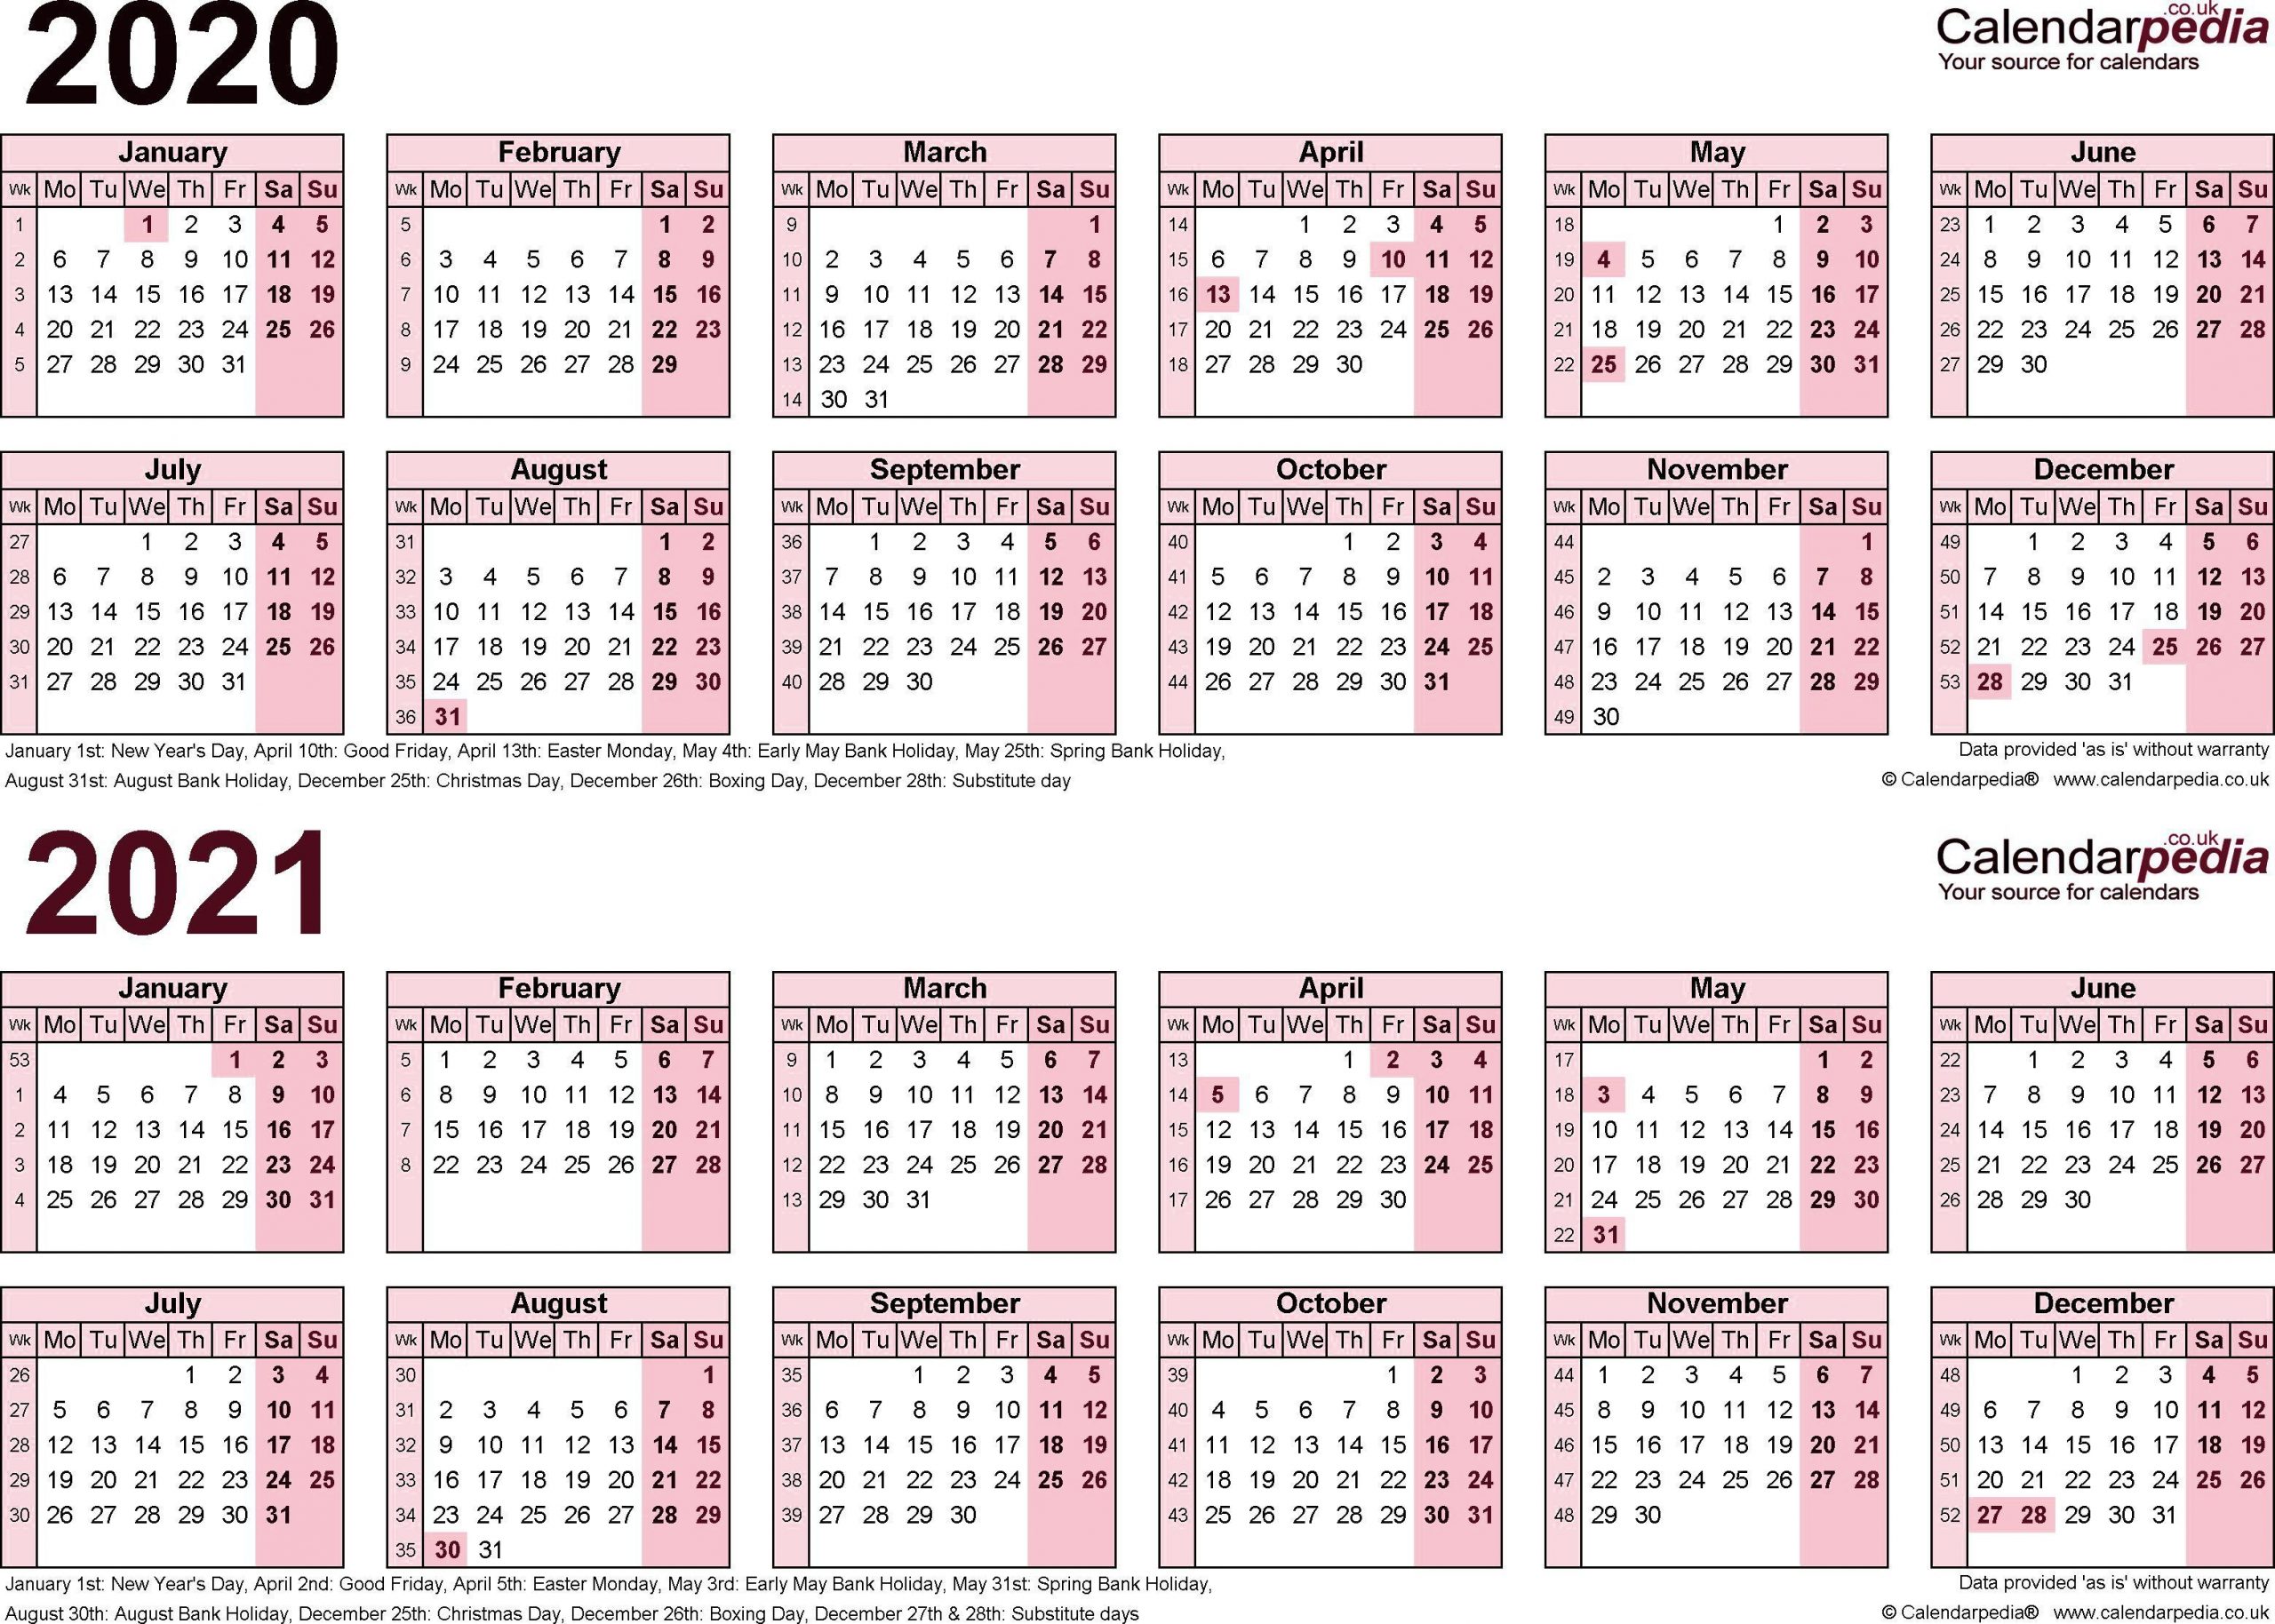 2020 Biweekly Payroll Calendar Template ~ Addictionary